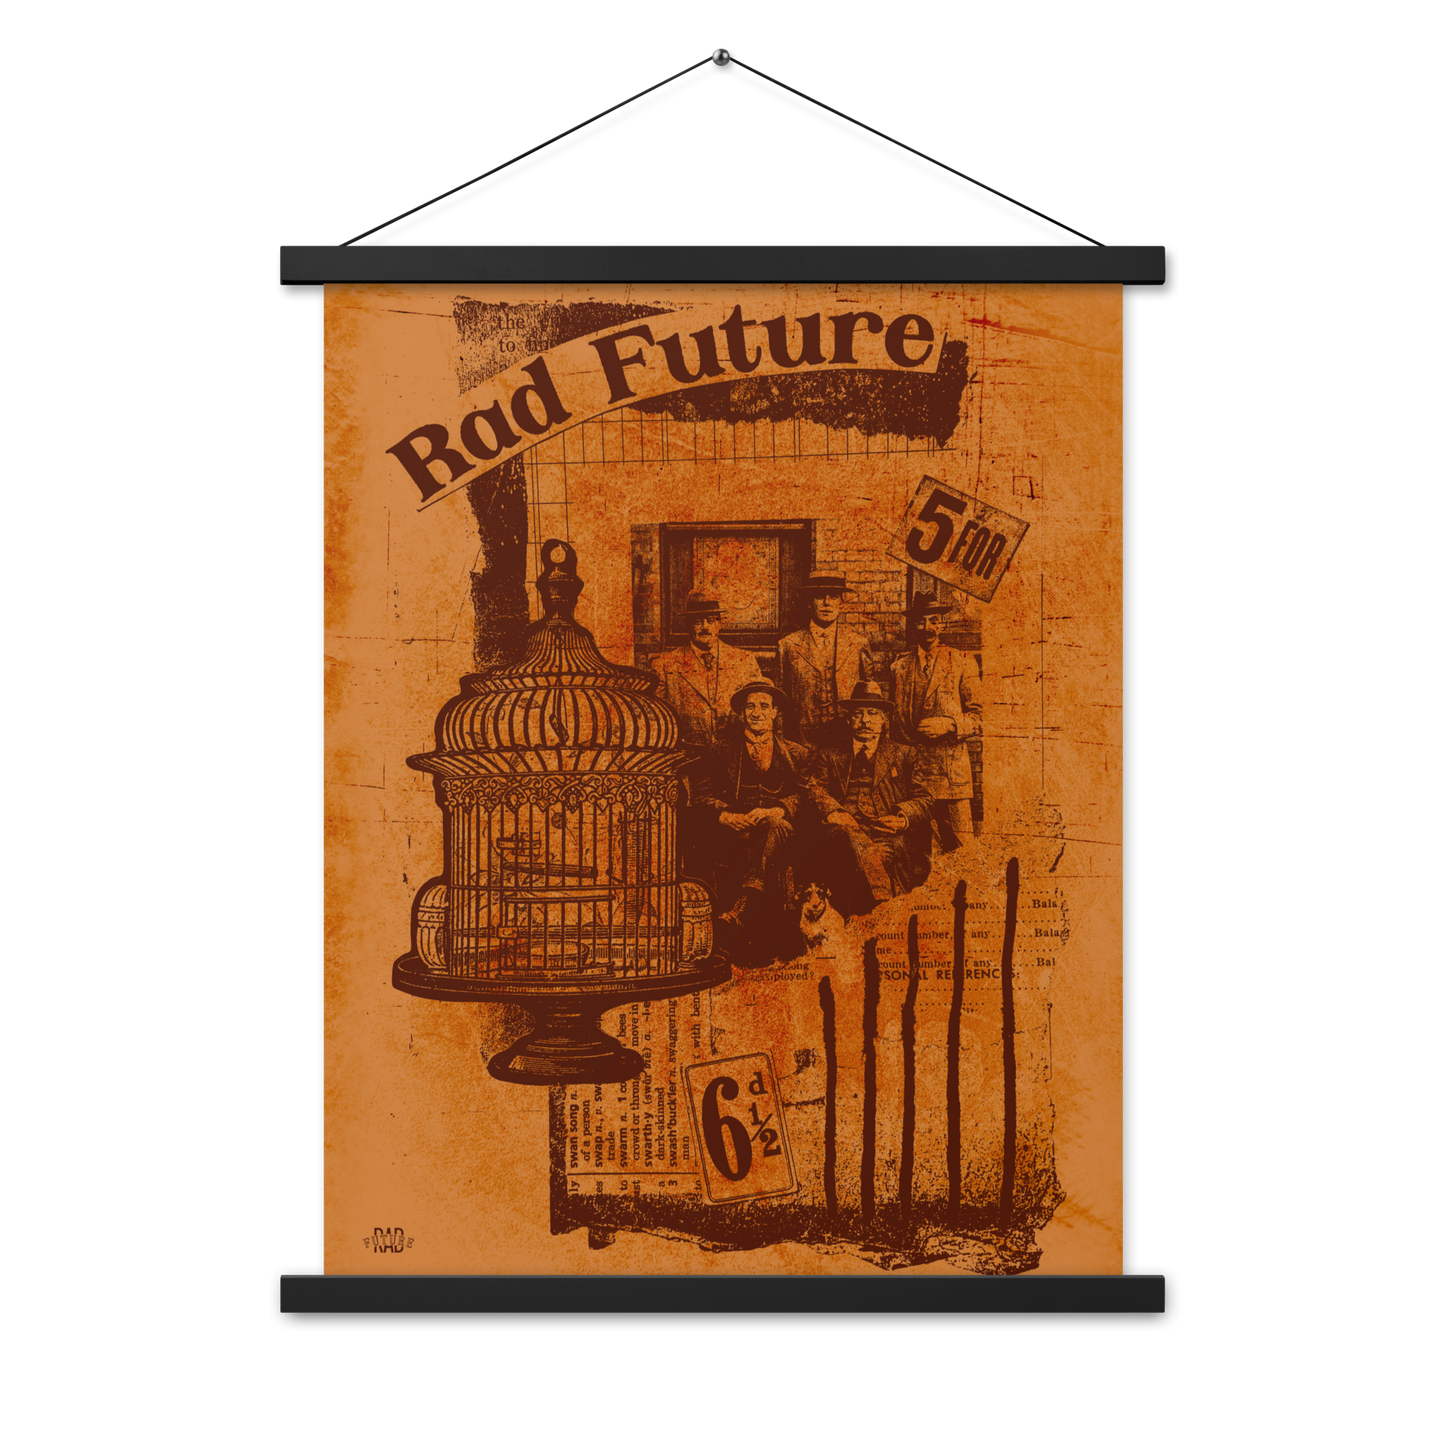 Orange/Brown Vintage Distressed Poster Design with hangers - Rad Future